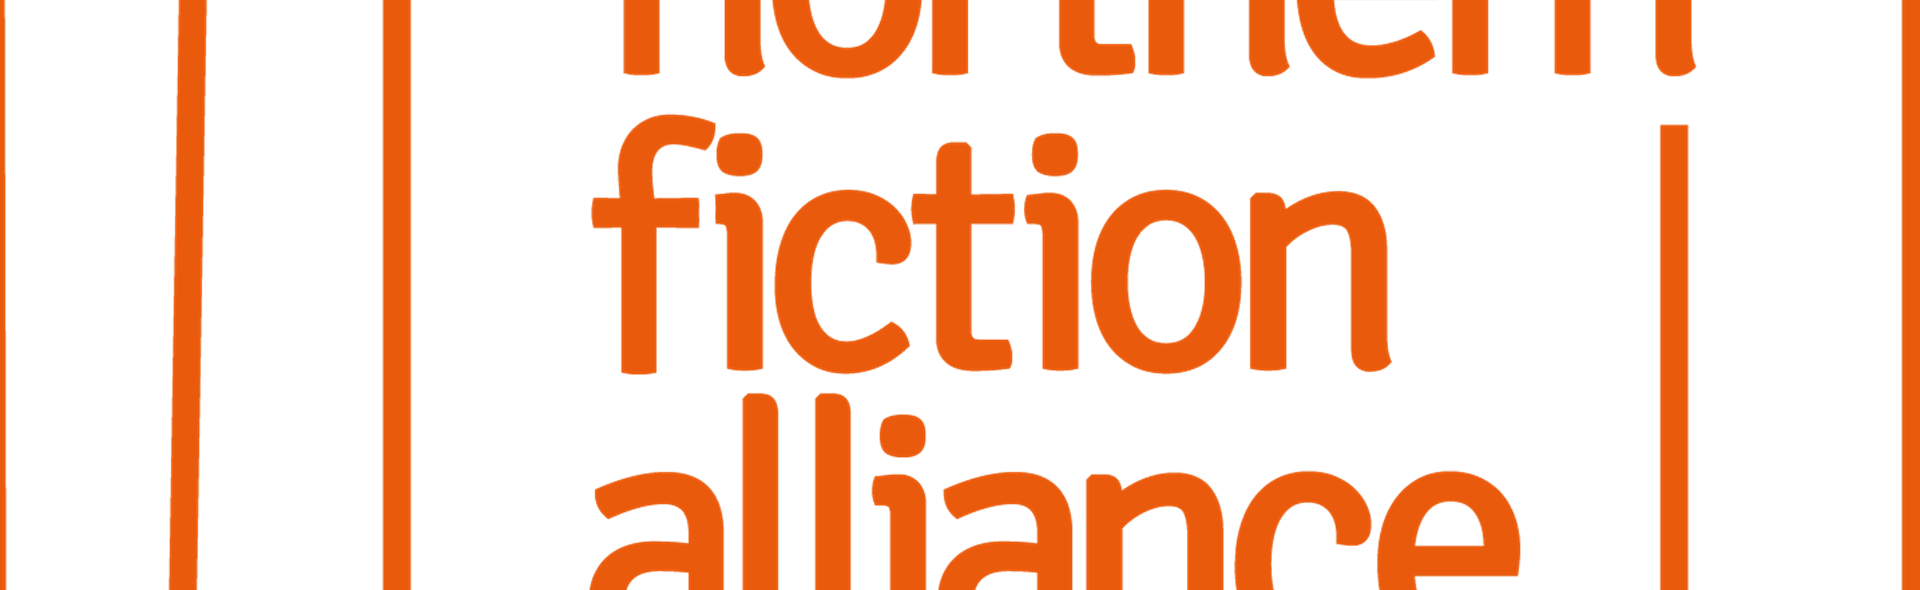 Northern Fiction Alliance Roadshow 